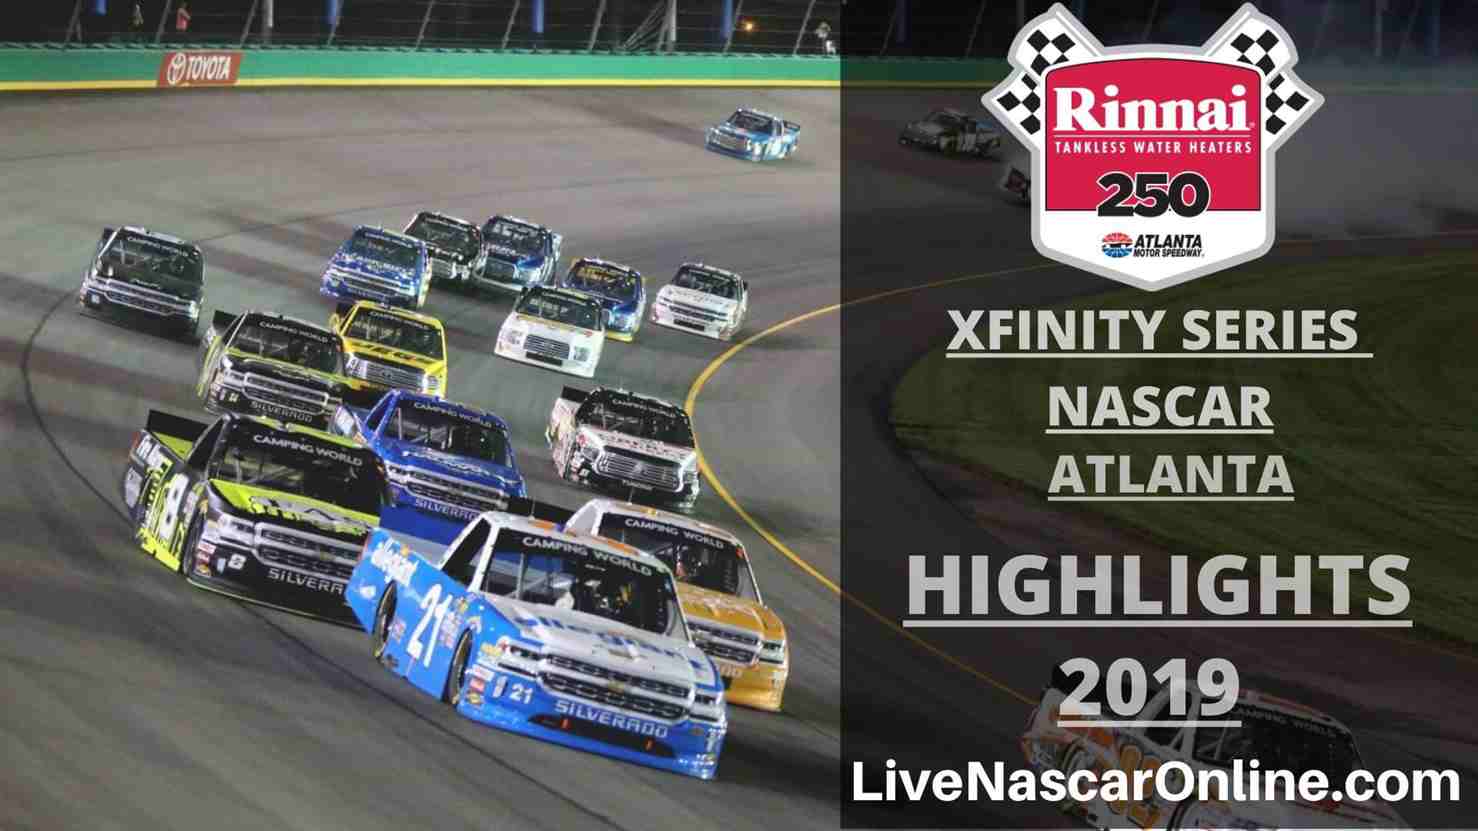 NASCAR XFINITY SERIES ATLANTA HIGHLIGHTS 2019